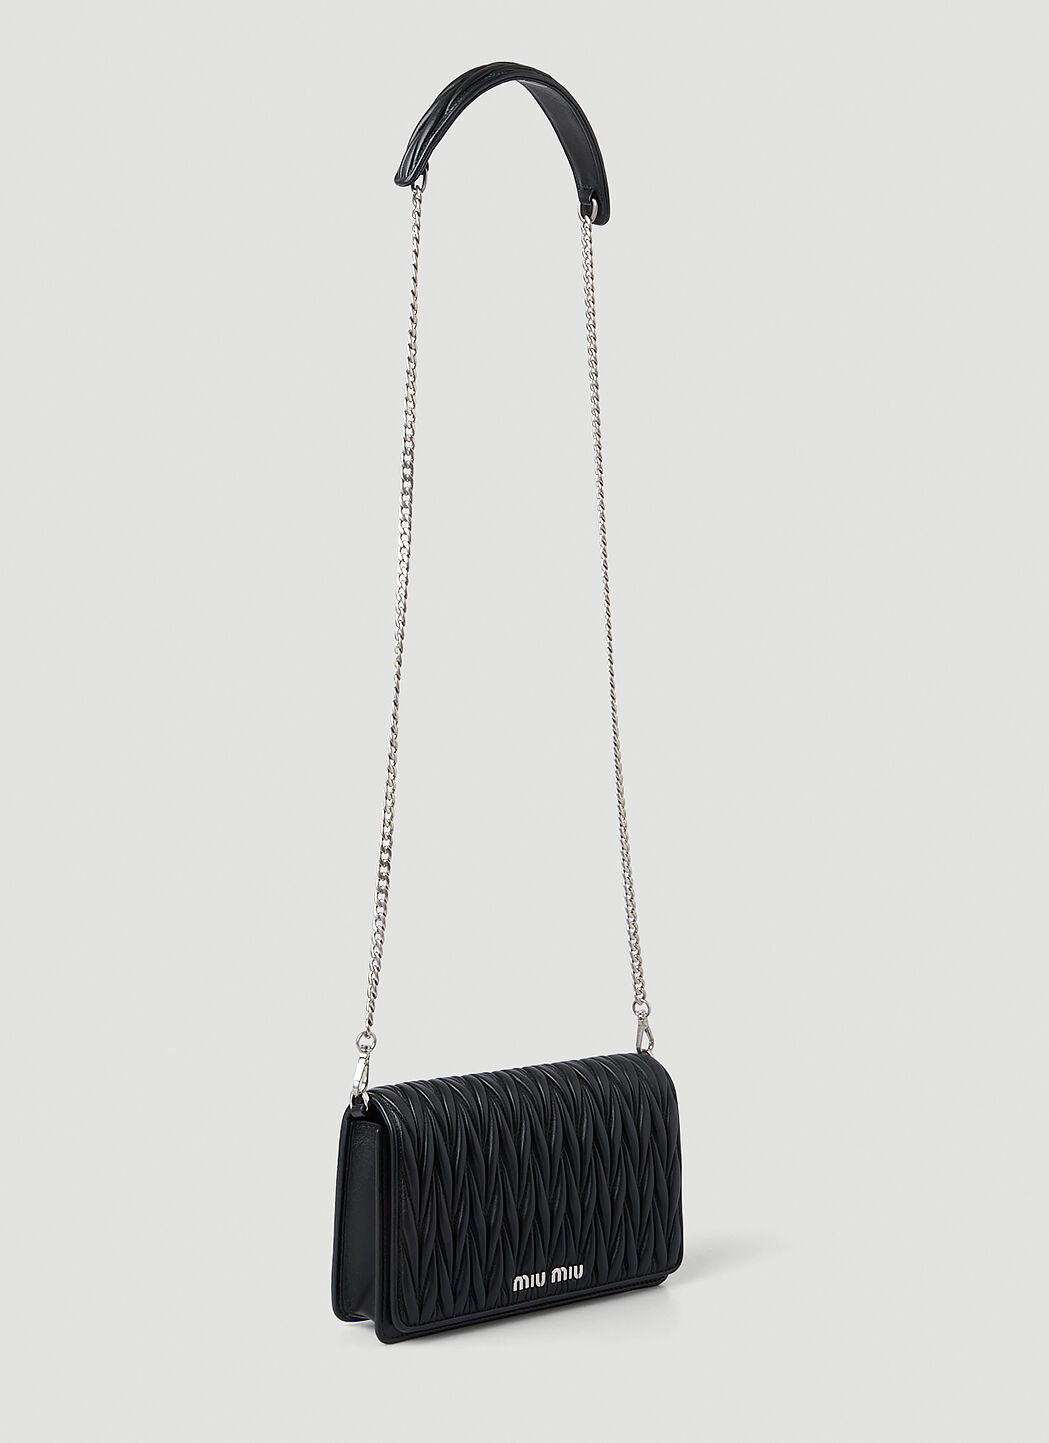 Miu Miu Women's Matelassé Chain Strap Shoulder Bag in Black | LN-CC®